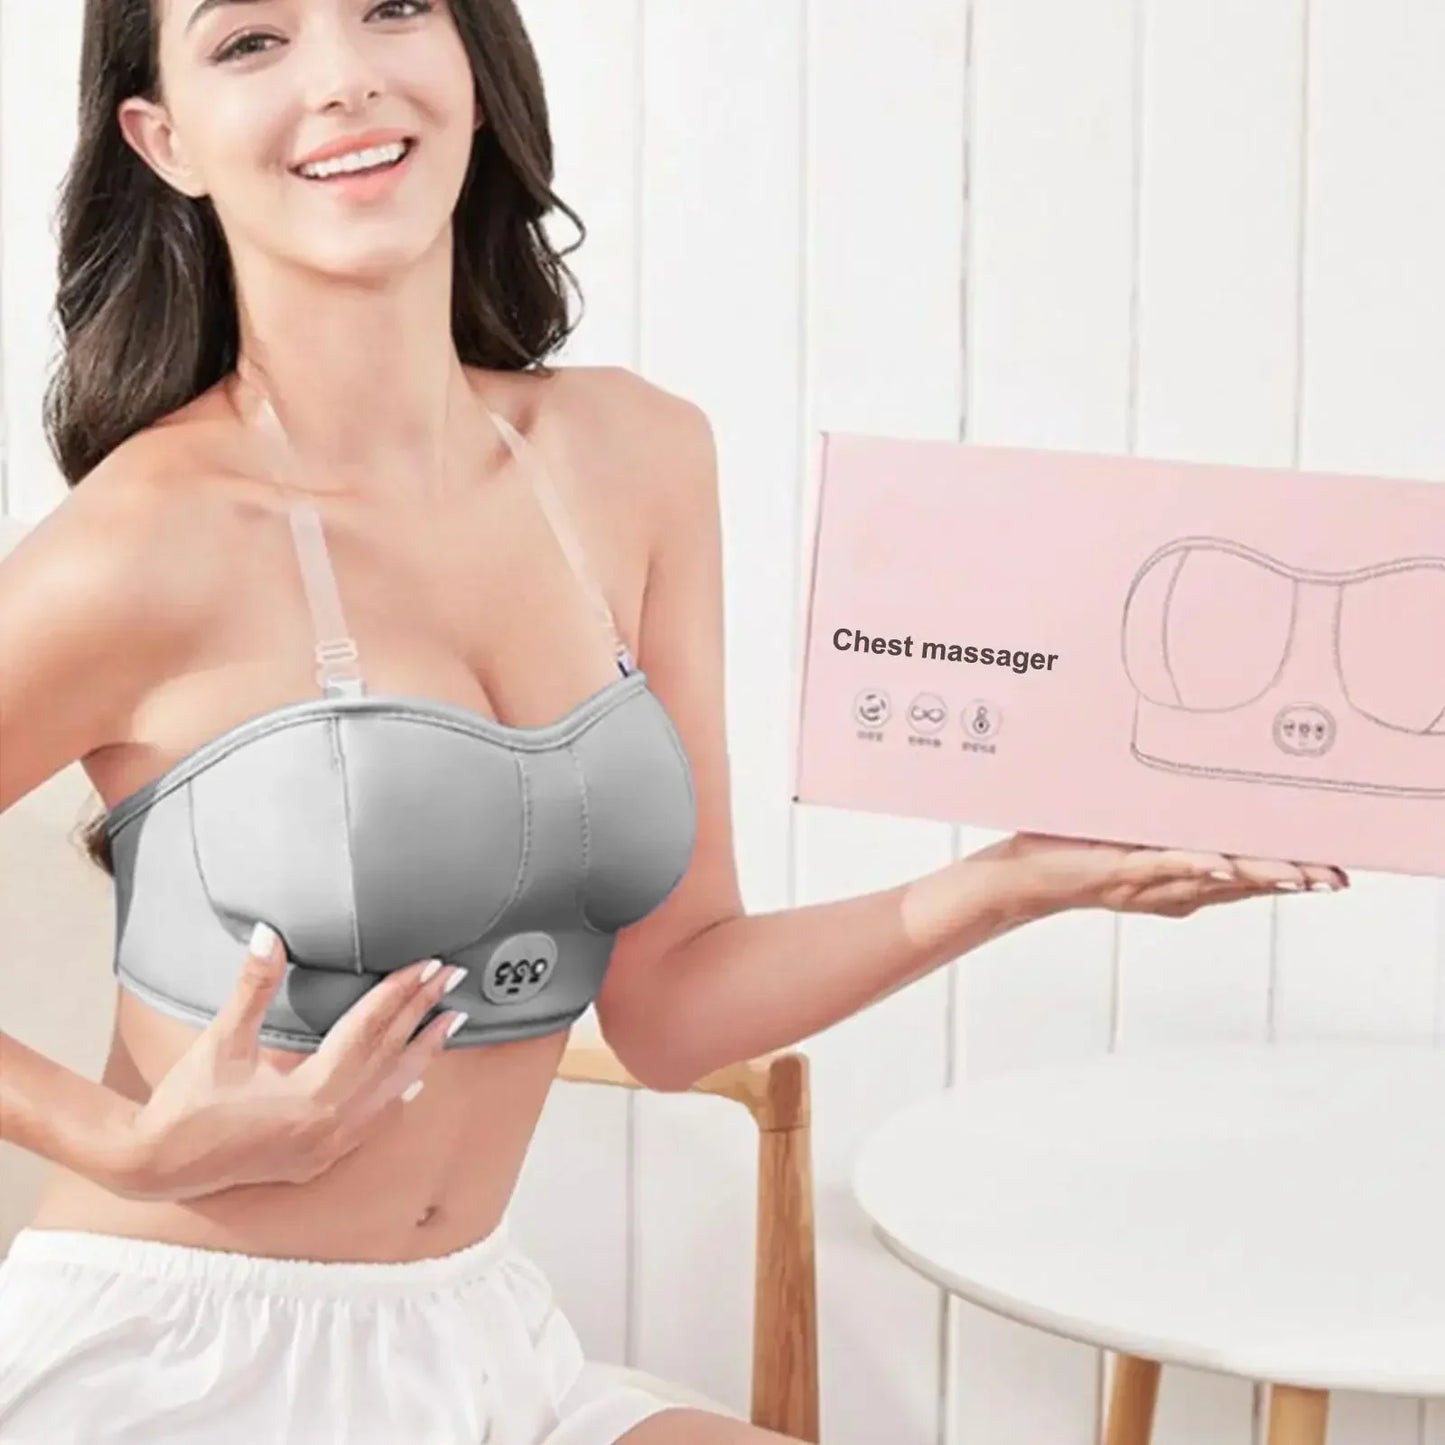 Electric Vibration Chest Massager Breast Enhancement Instrument Breast Heating Stimulator Machine